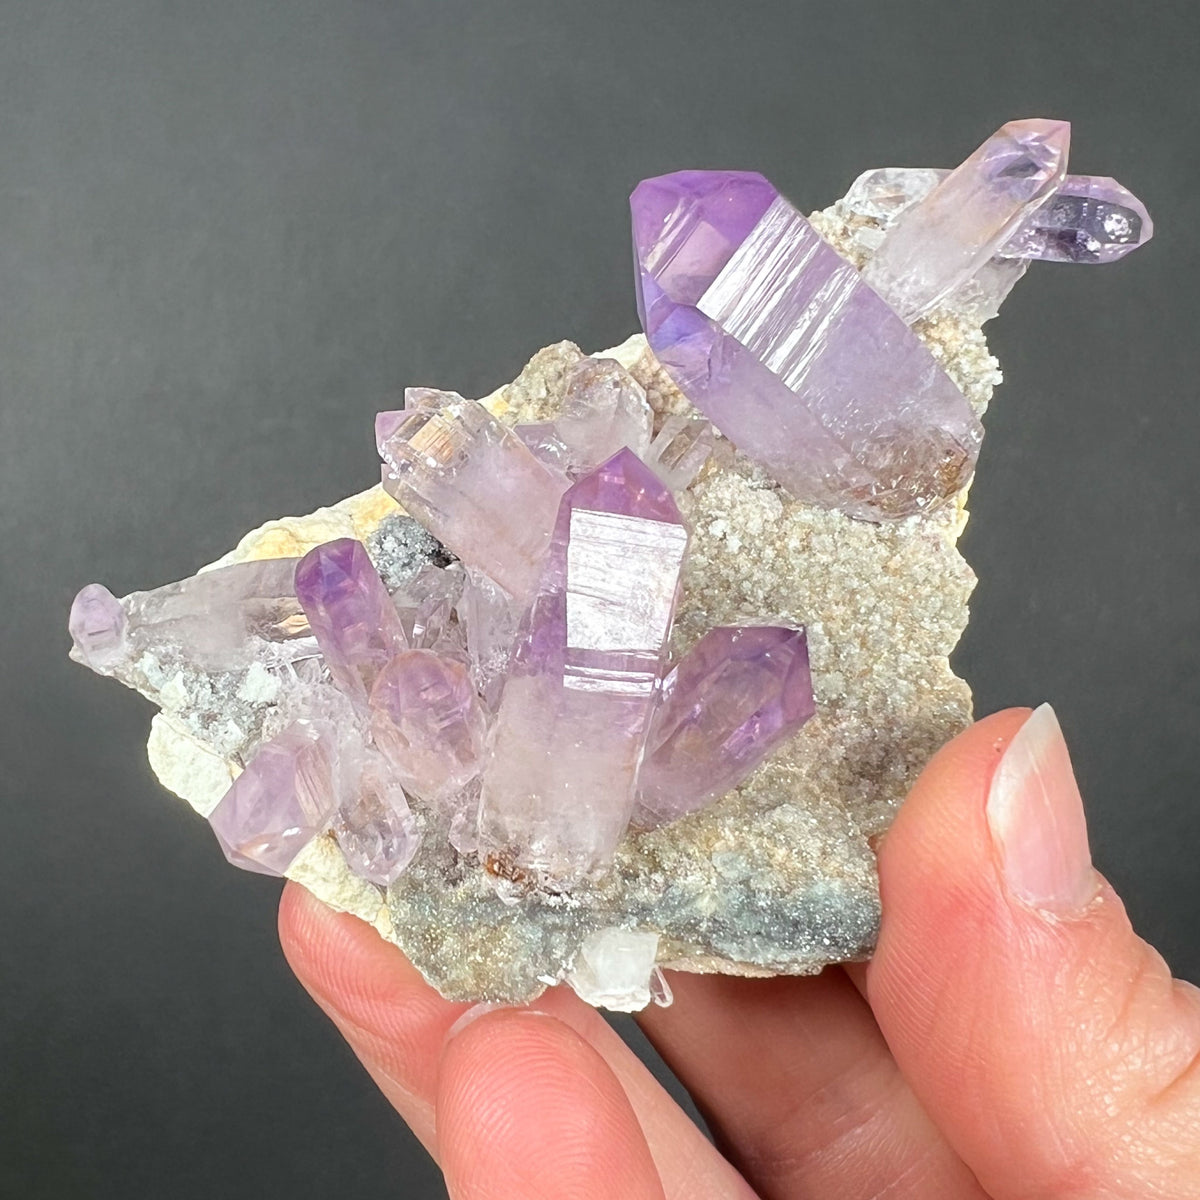 Amethyst Crystal Cluster from Veracruz Mexico